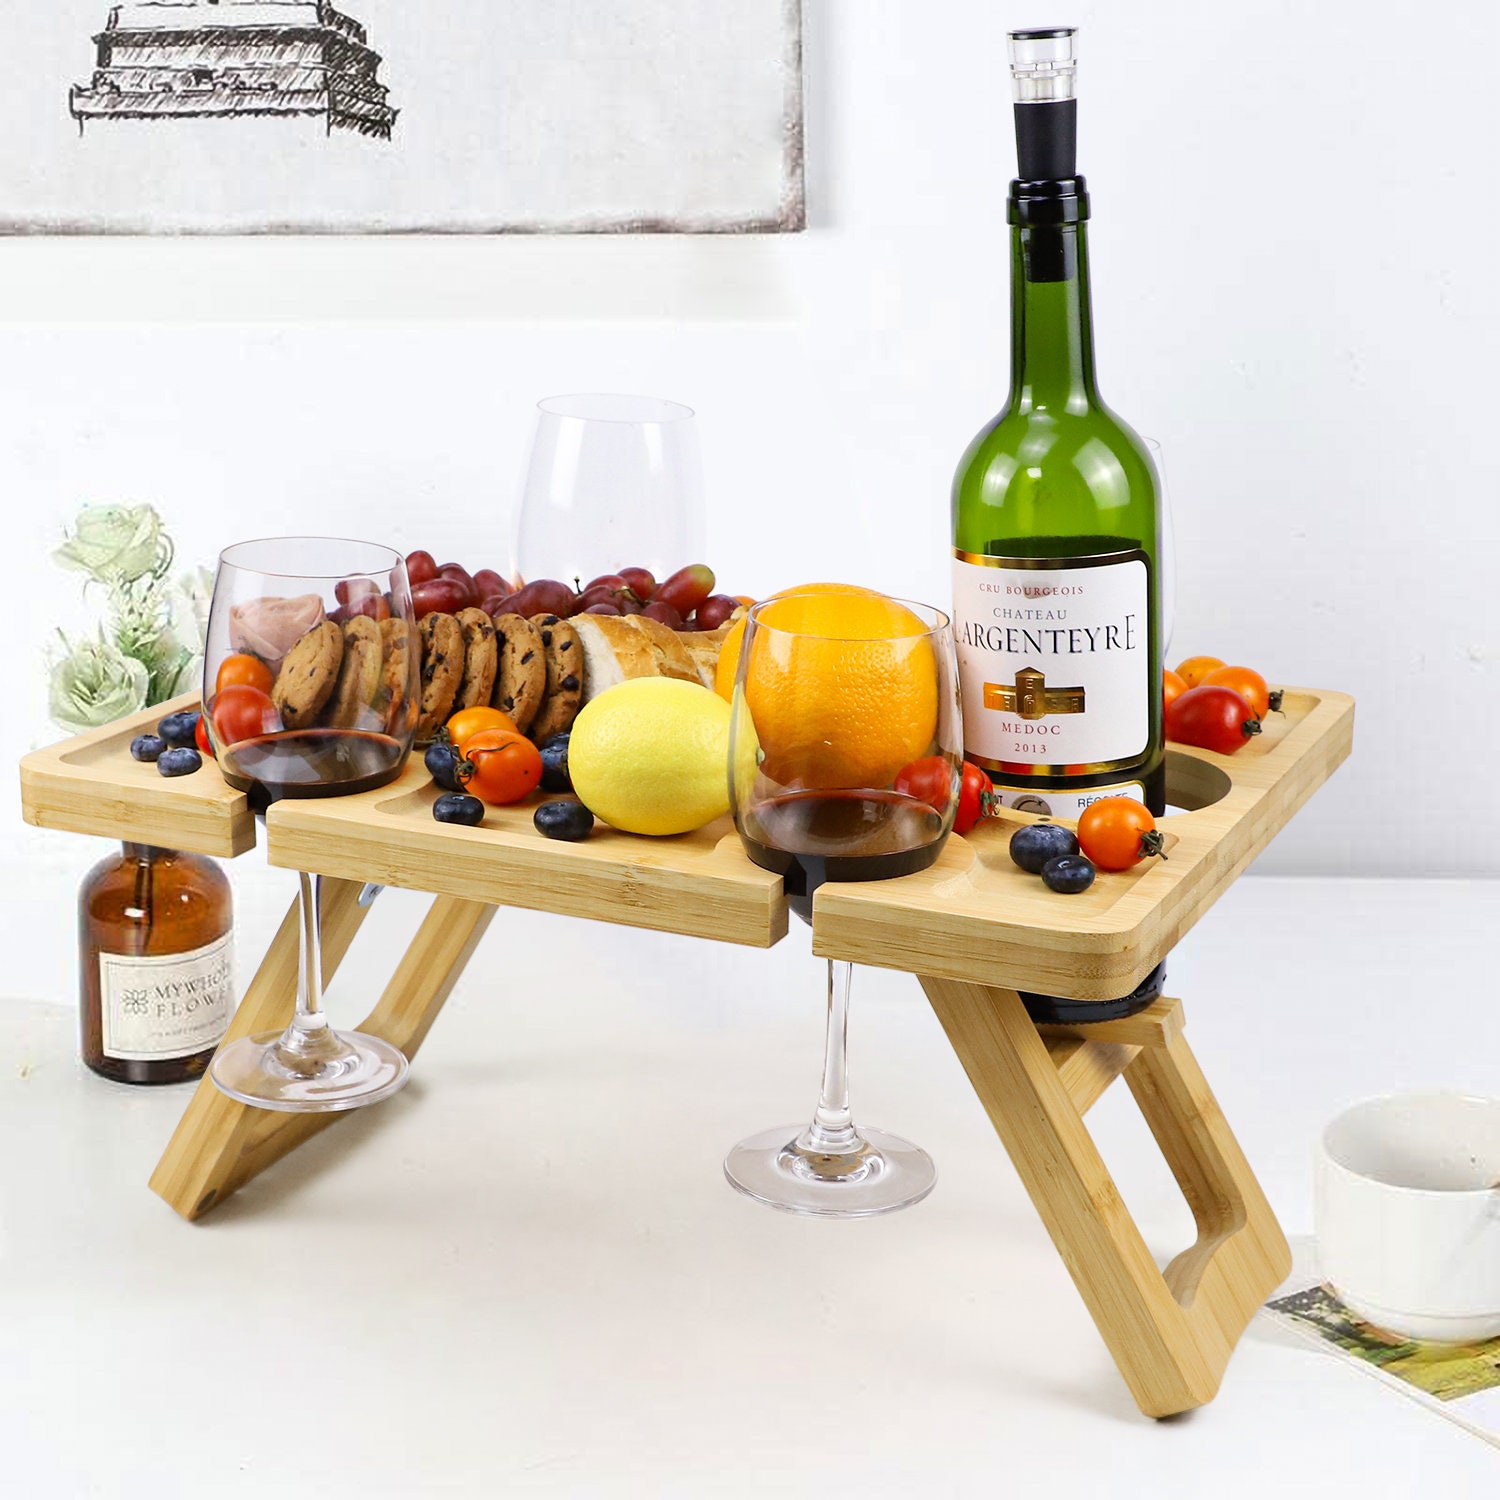 35*35*22cm Picnic Table Foldable Lightweight Sturdy Wine Glass